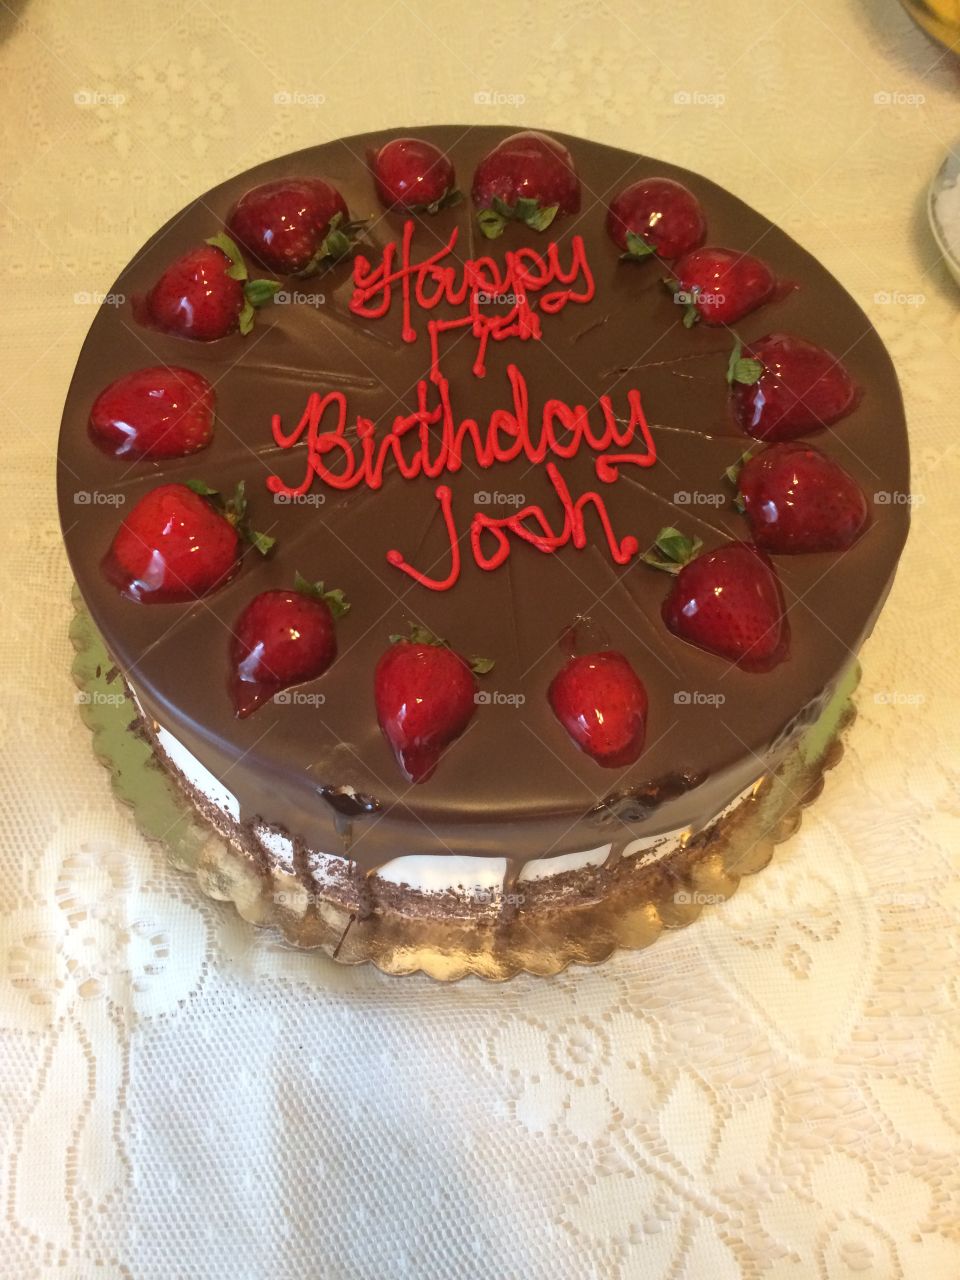 Happy birthday josh! 